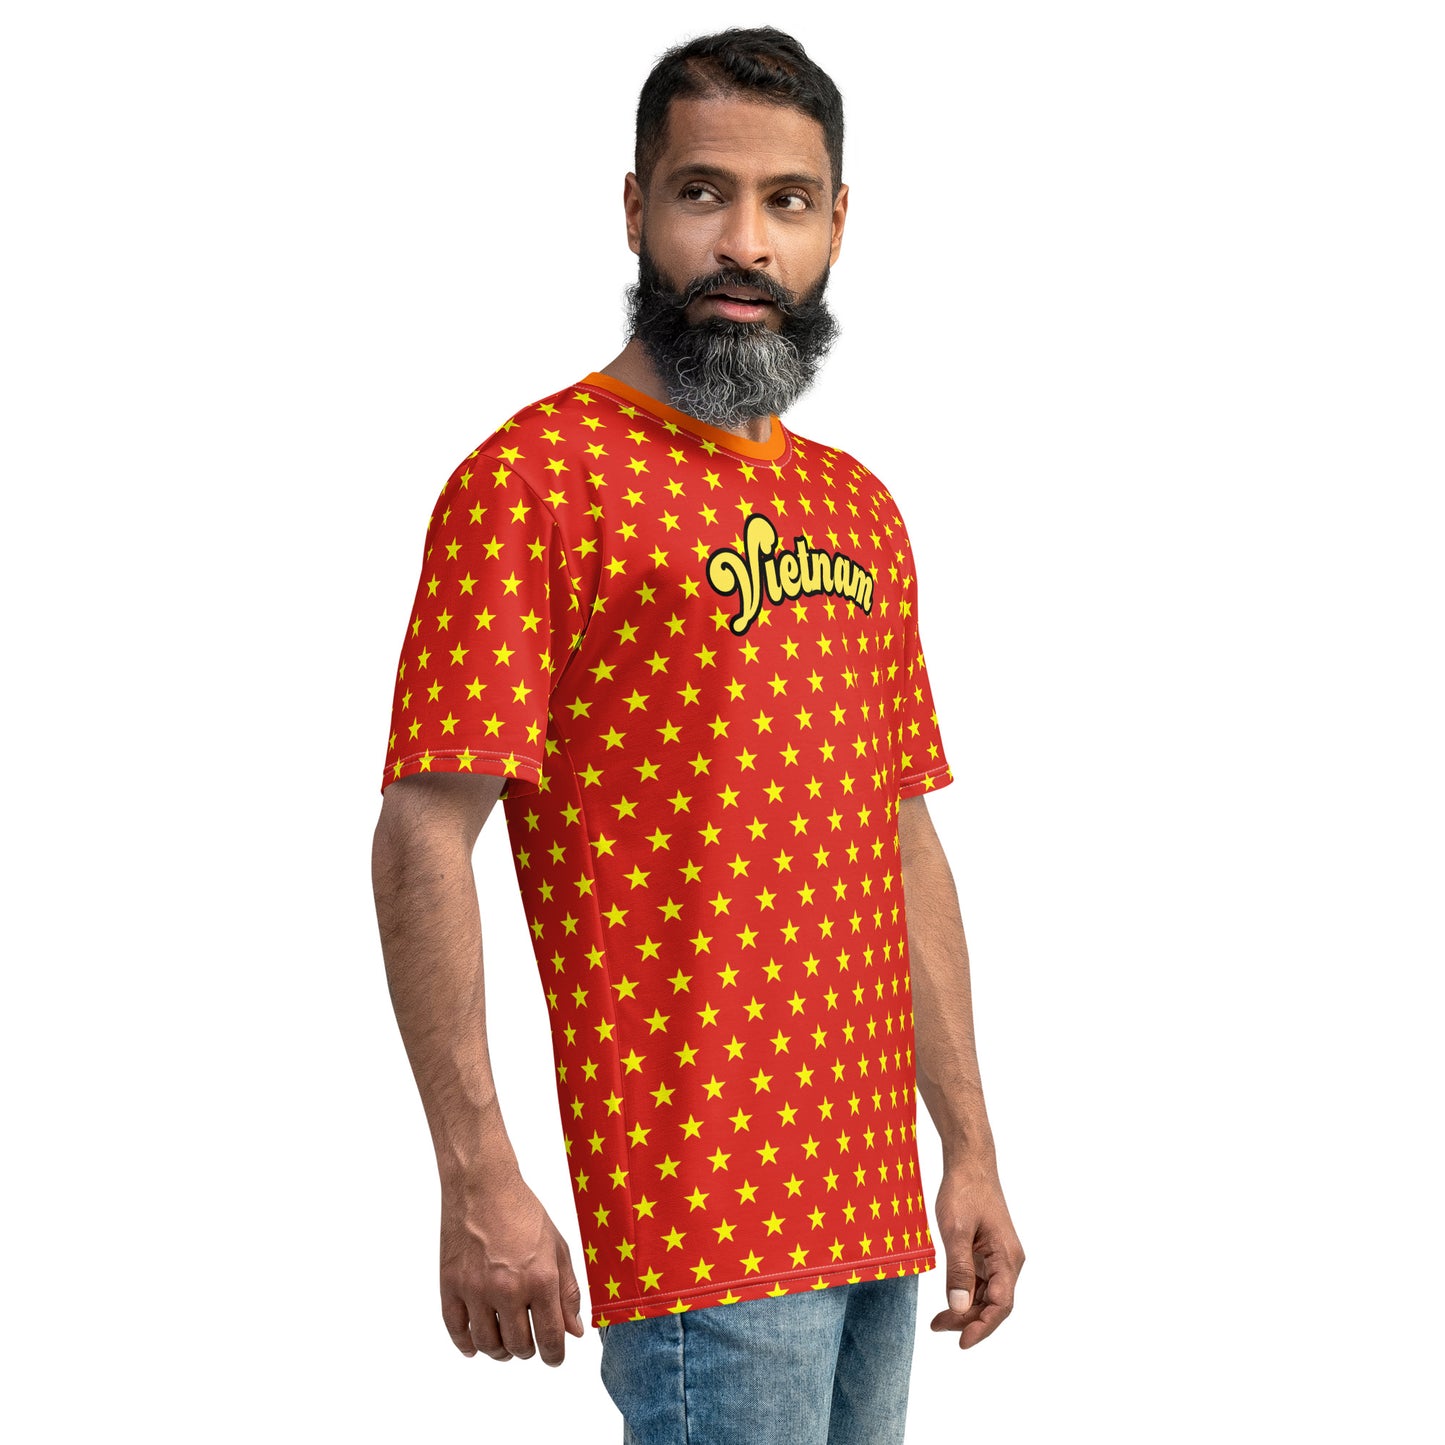 Men's T-Shirt: Celebrate Vietnam with Yellow Polka Dots